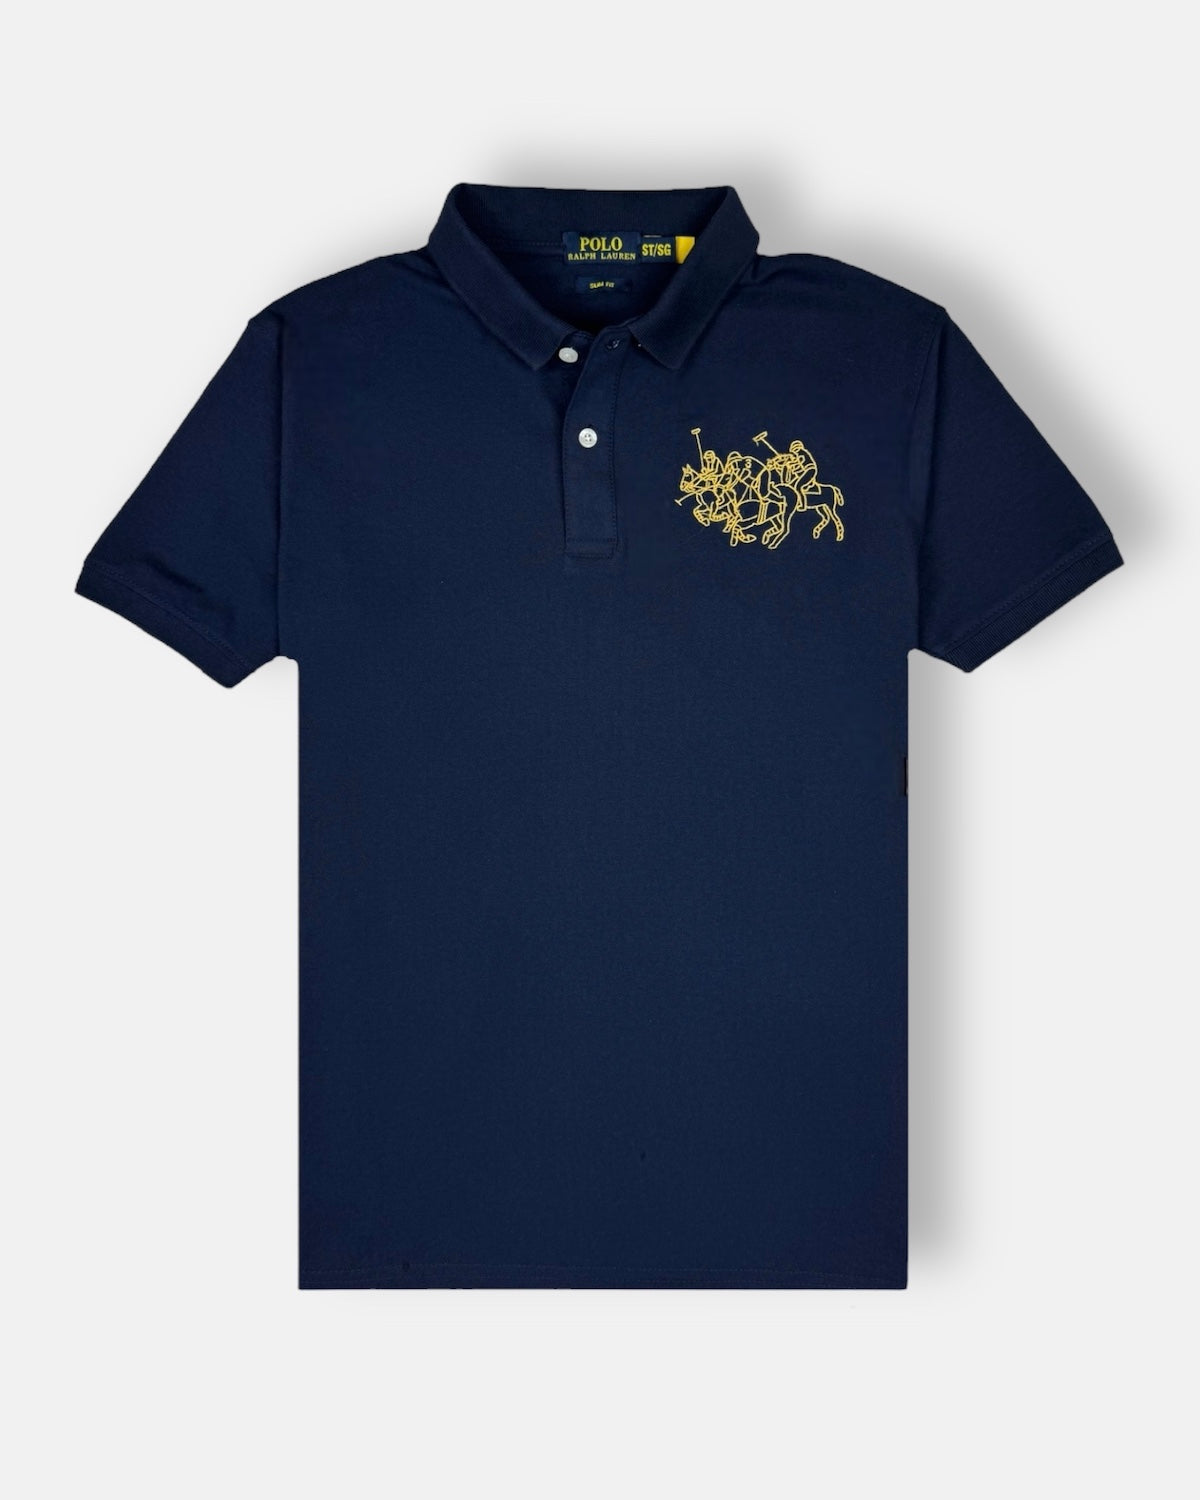 RL Premium 3 Pony Check Collar Polo Shirt (Navy Blue)